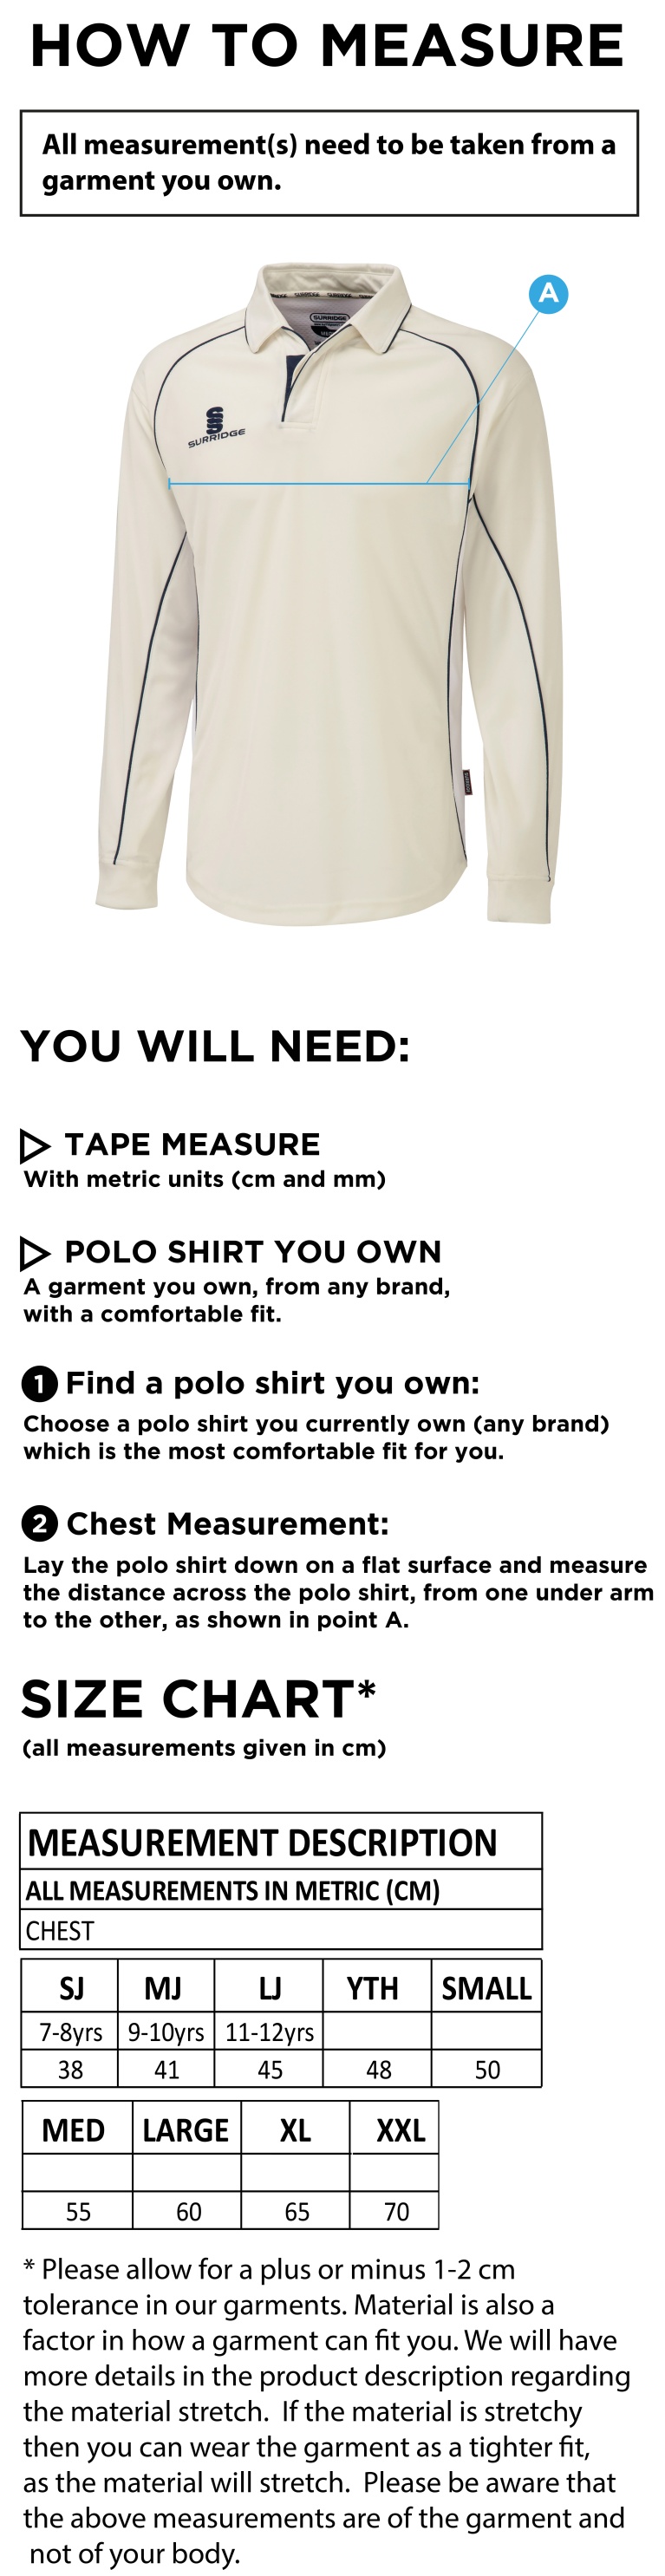 Cornwood CC - Premier Long Sleeve Shirt - Size Guide